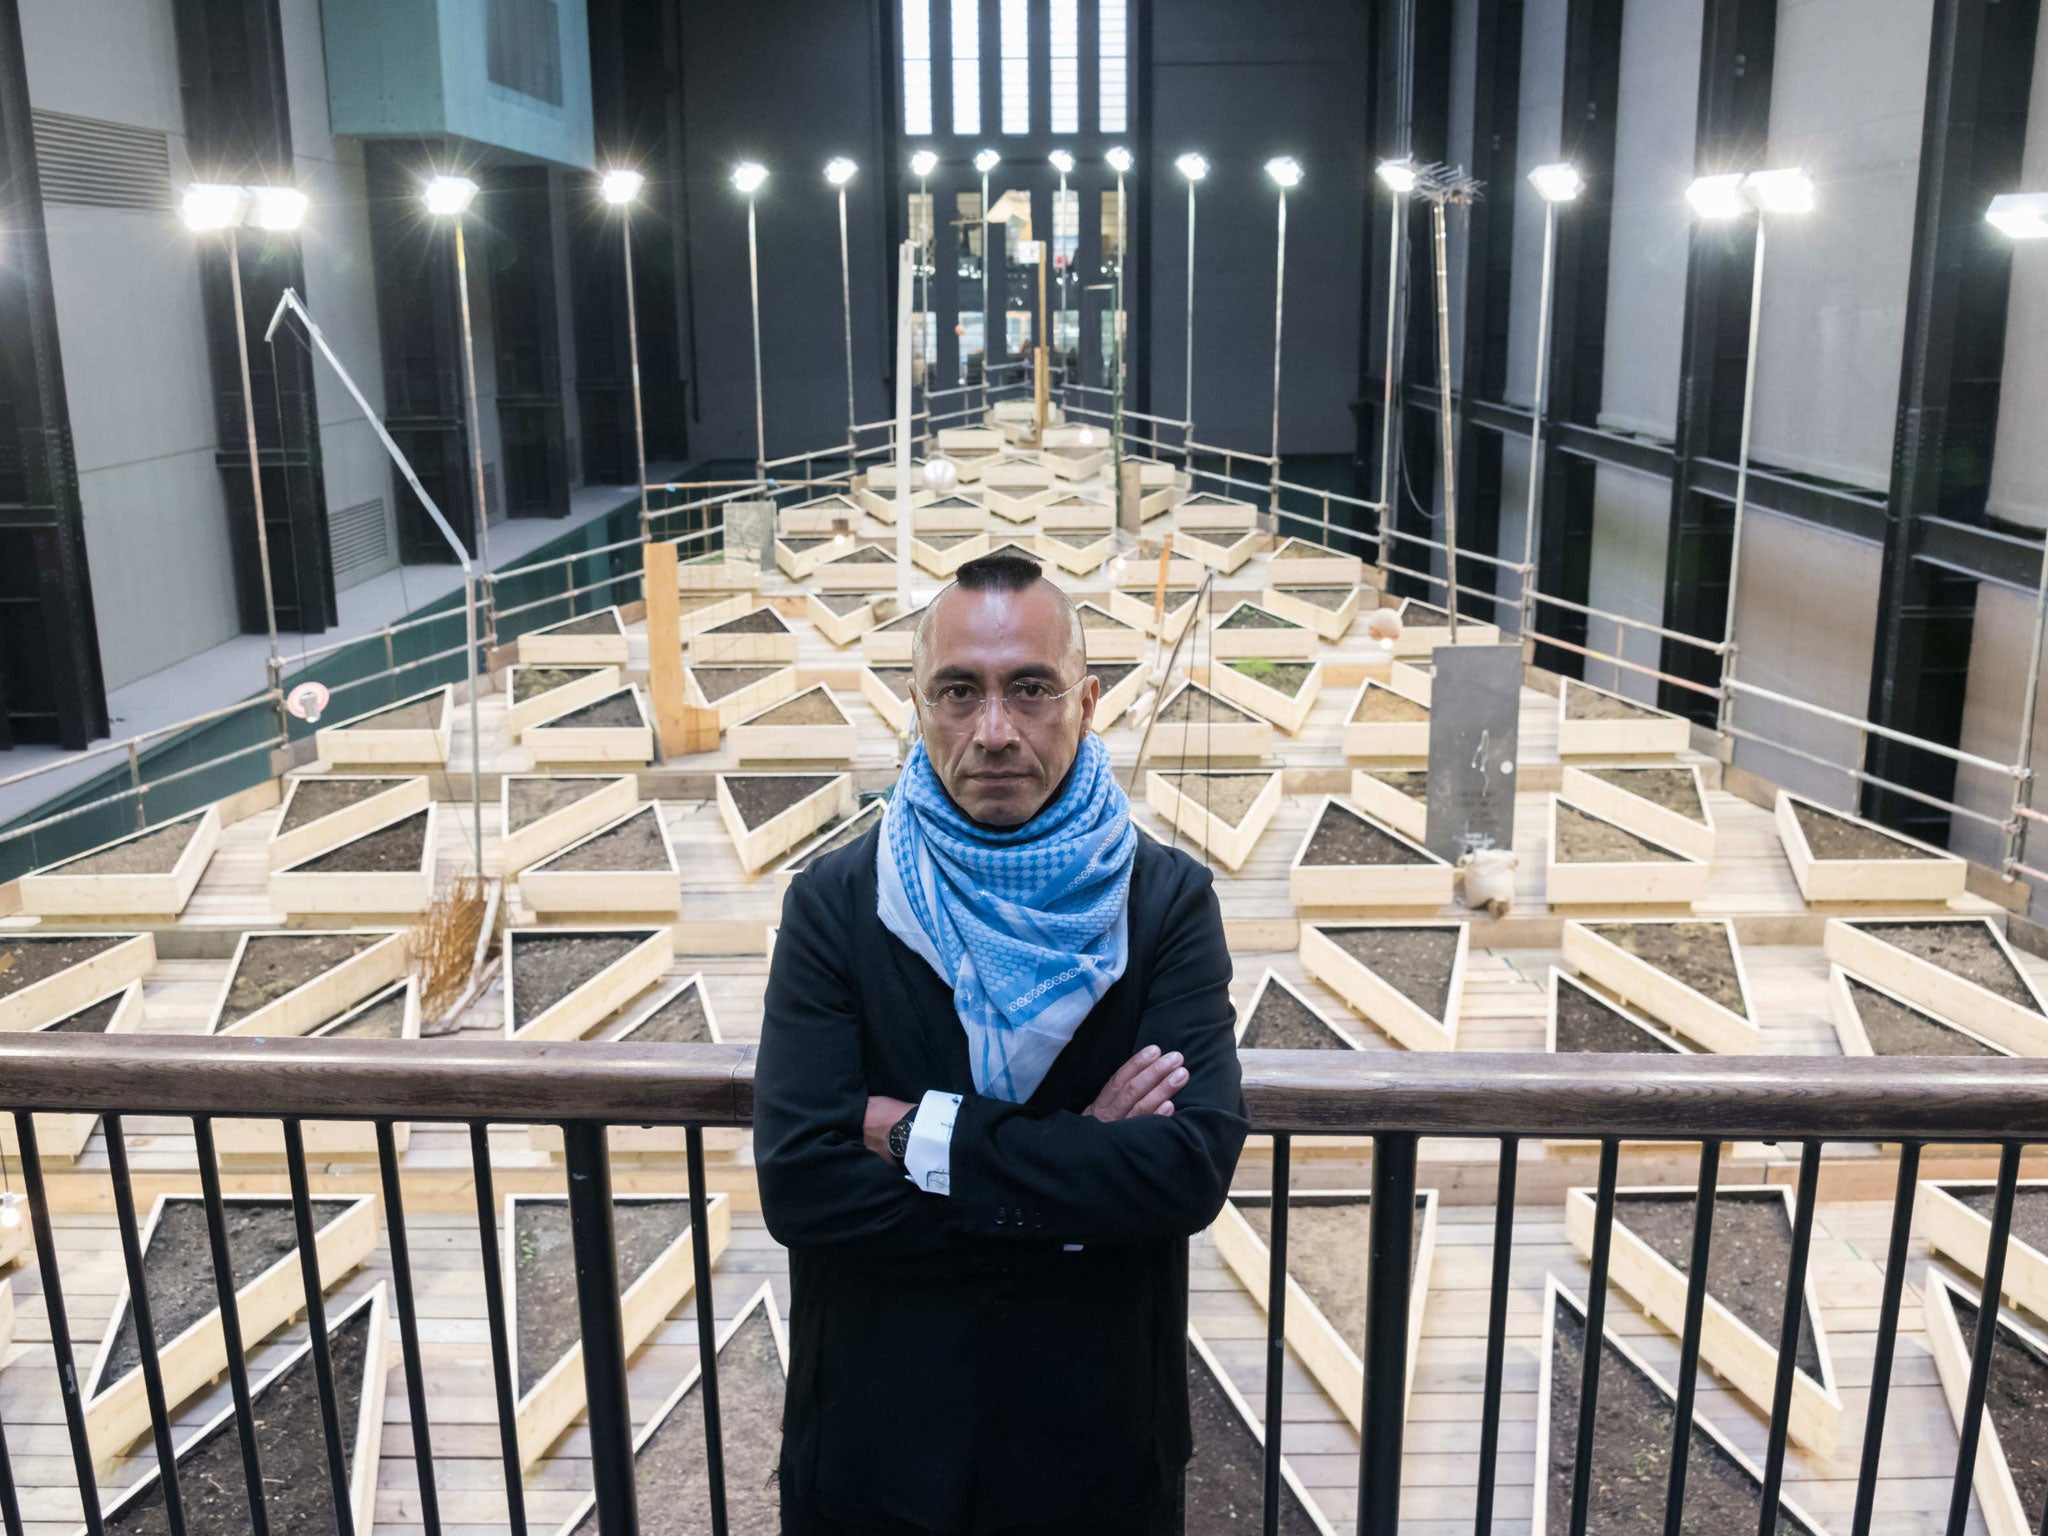 ‘Empty Lot’ fills the entire Turbine Hall at Tate Modern